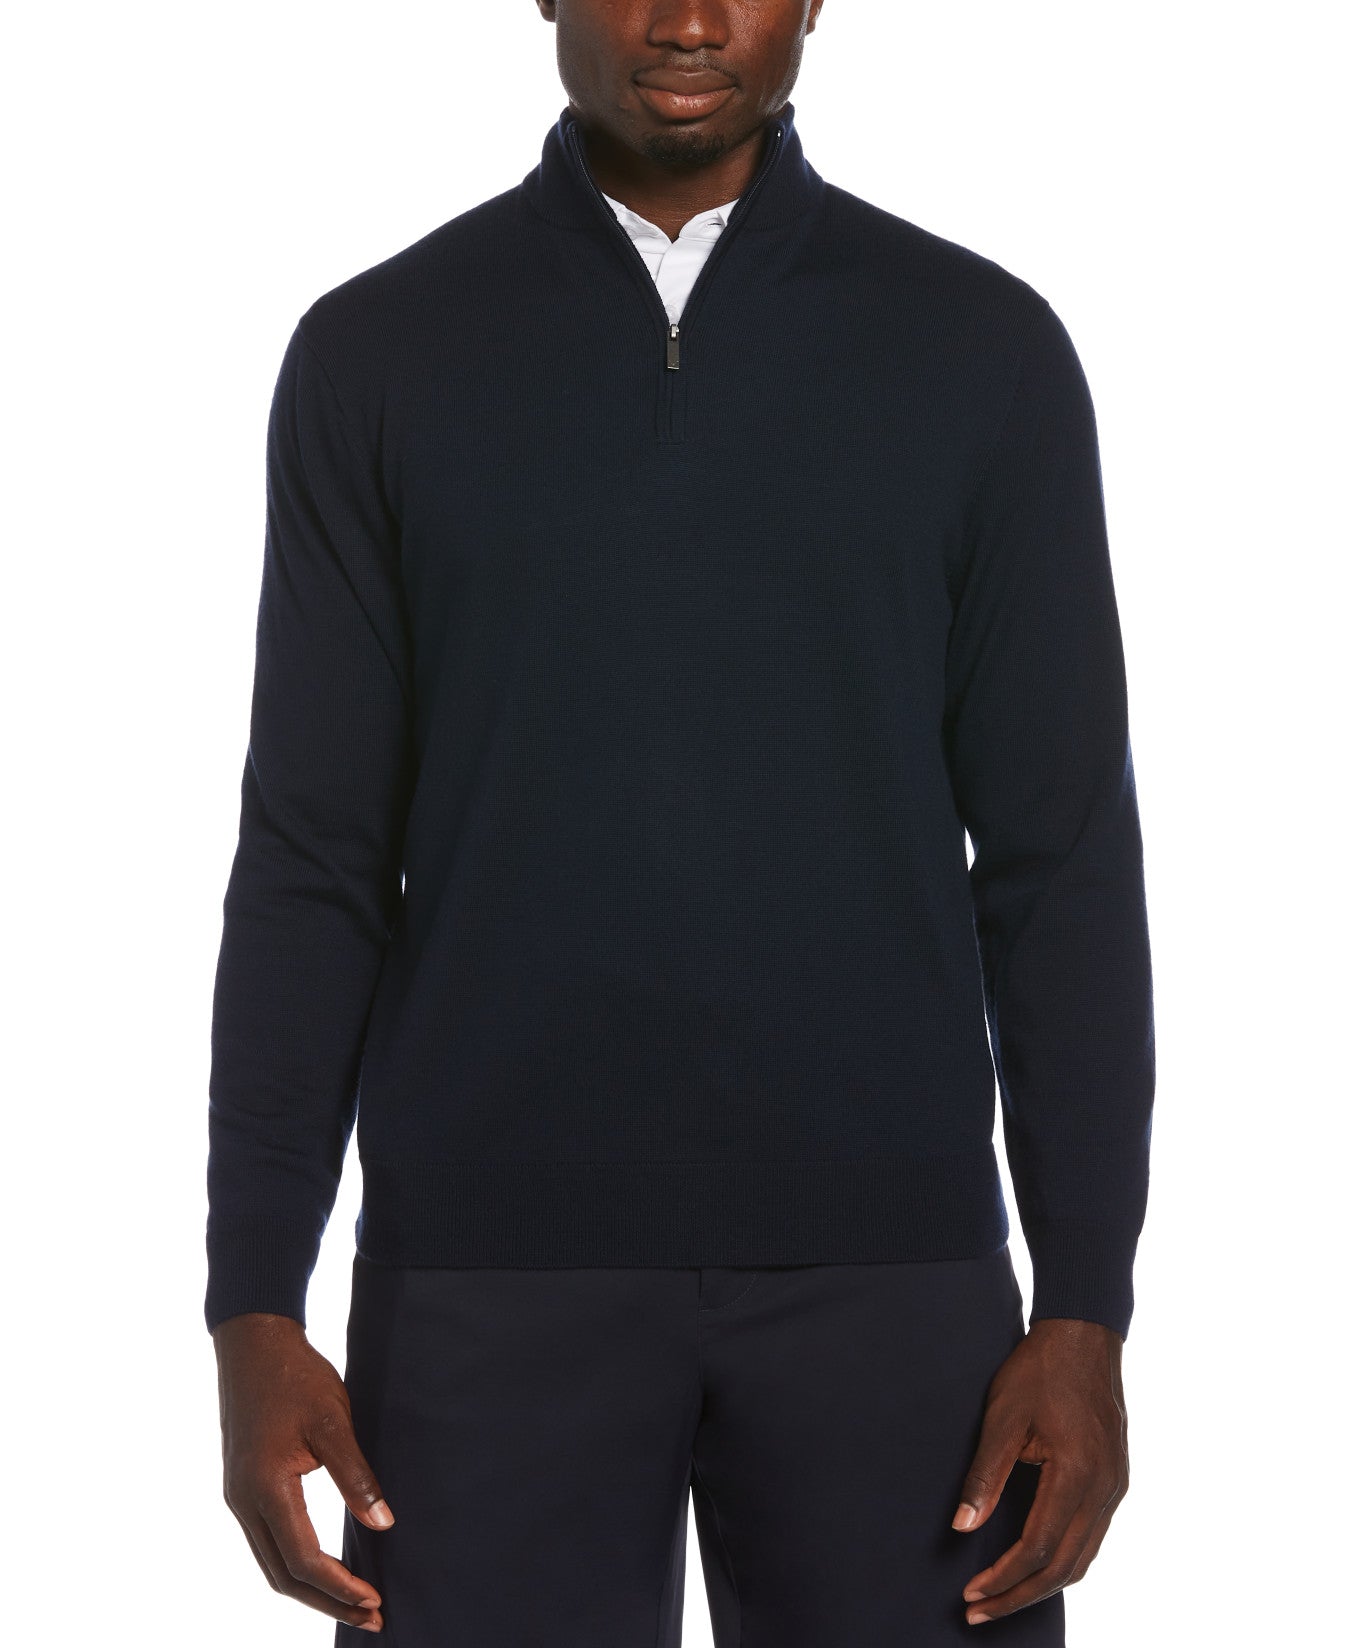 View Thermal Merino Wool Quarter Zip Sweater In Dark Navy Dark Navy XL information